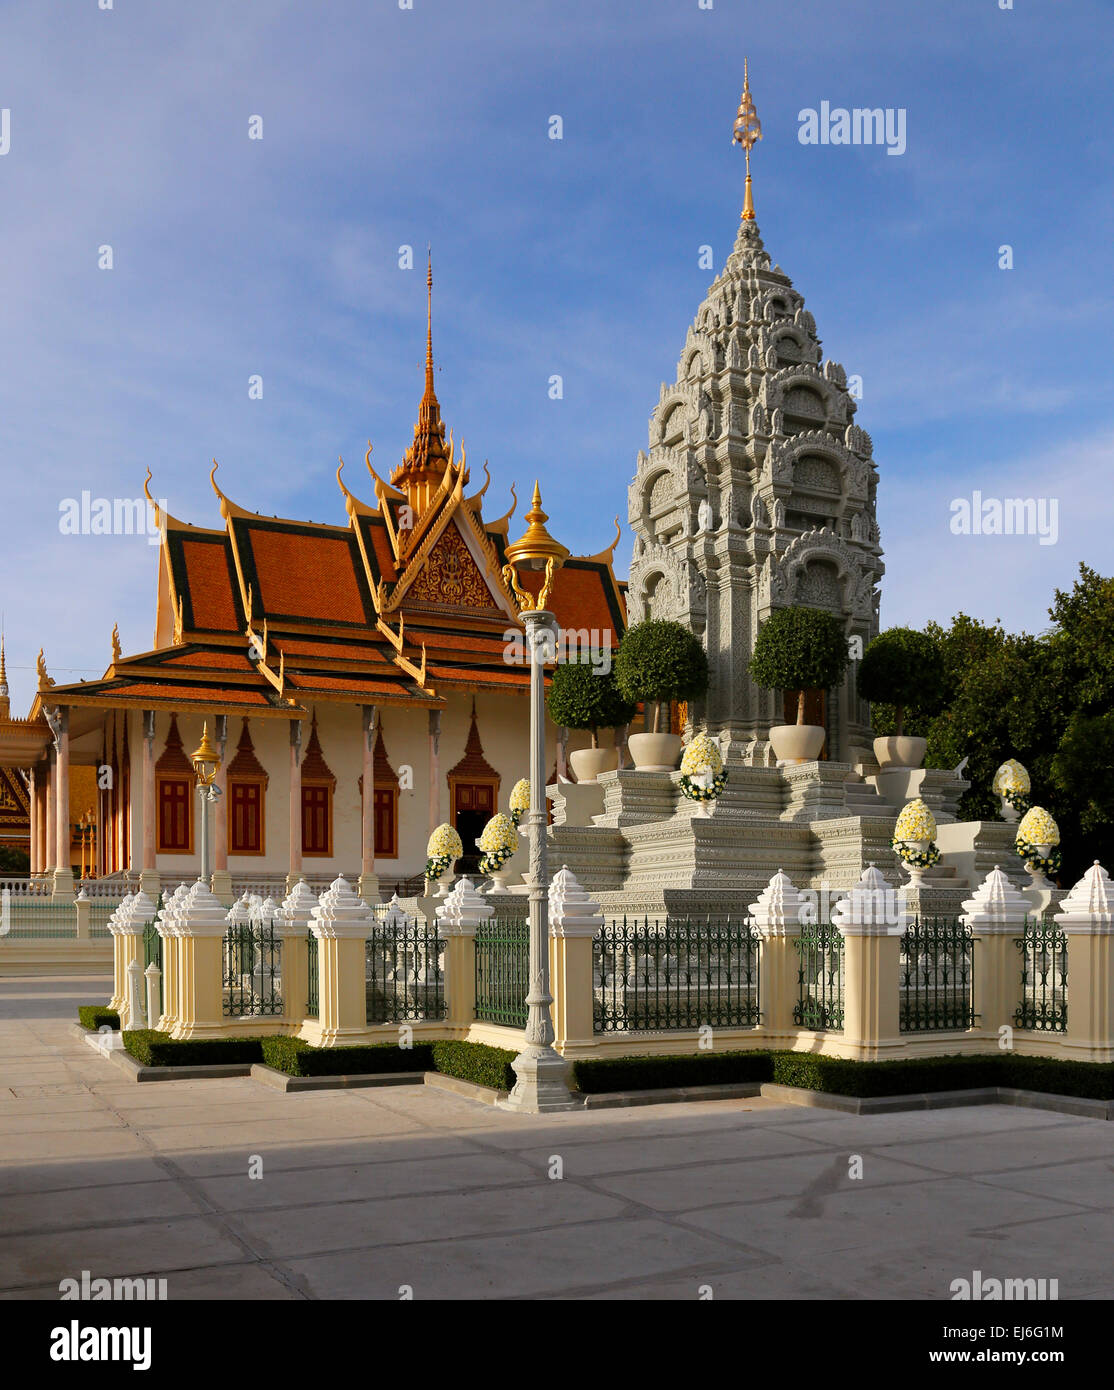 Silver Pagoda and Stupa, Royal Palace, Phnom Penh, Cambodia Stock Photo